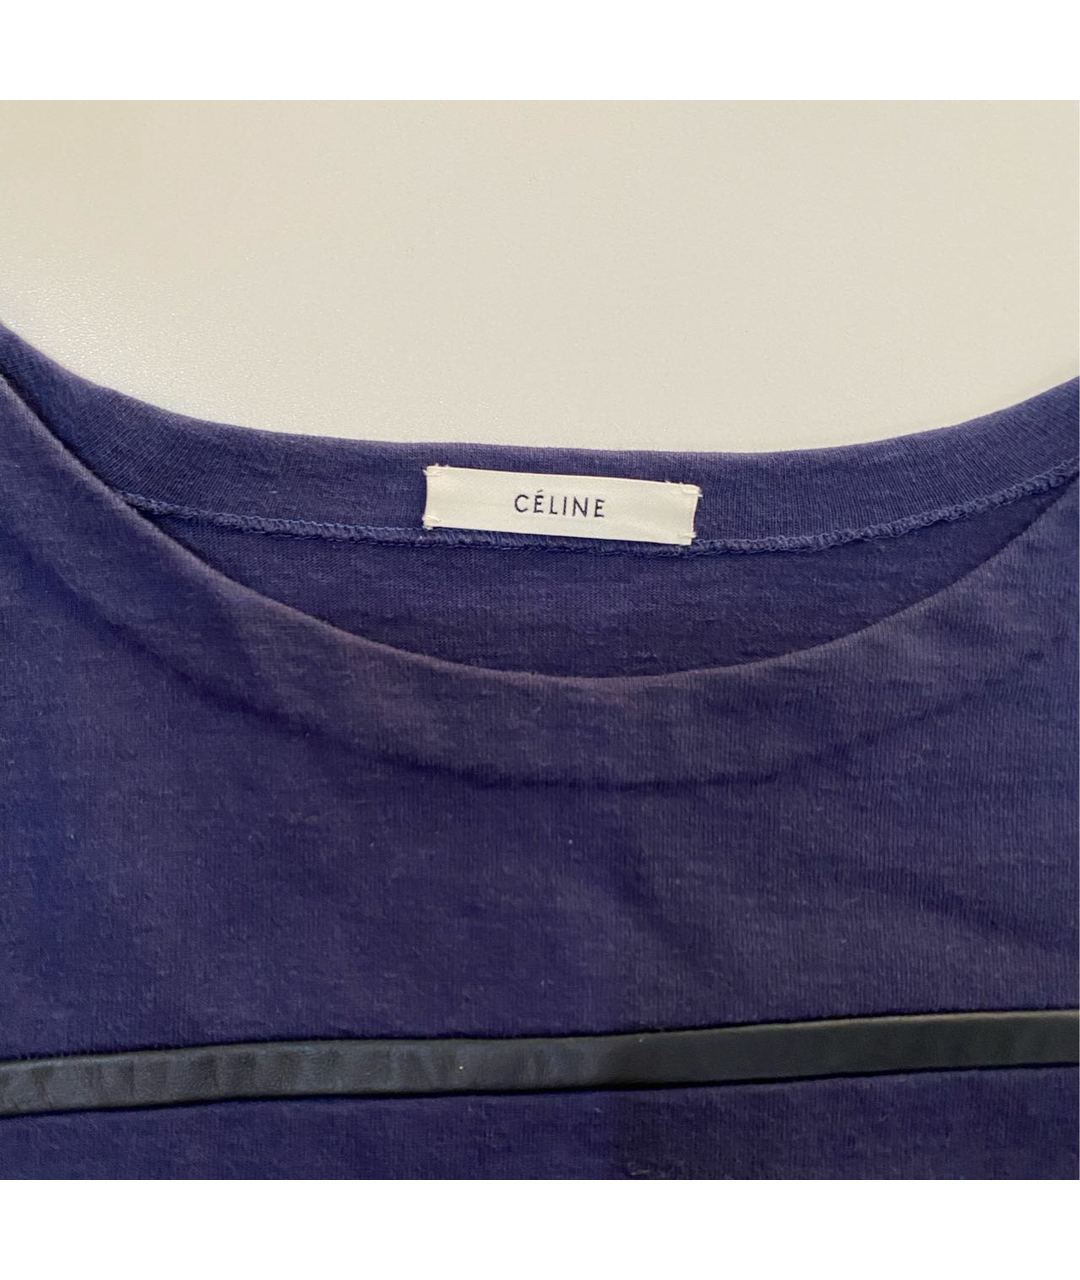 CELINE PRE-OWNED Синий хлопковый джемпер / свитер, фото 2